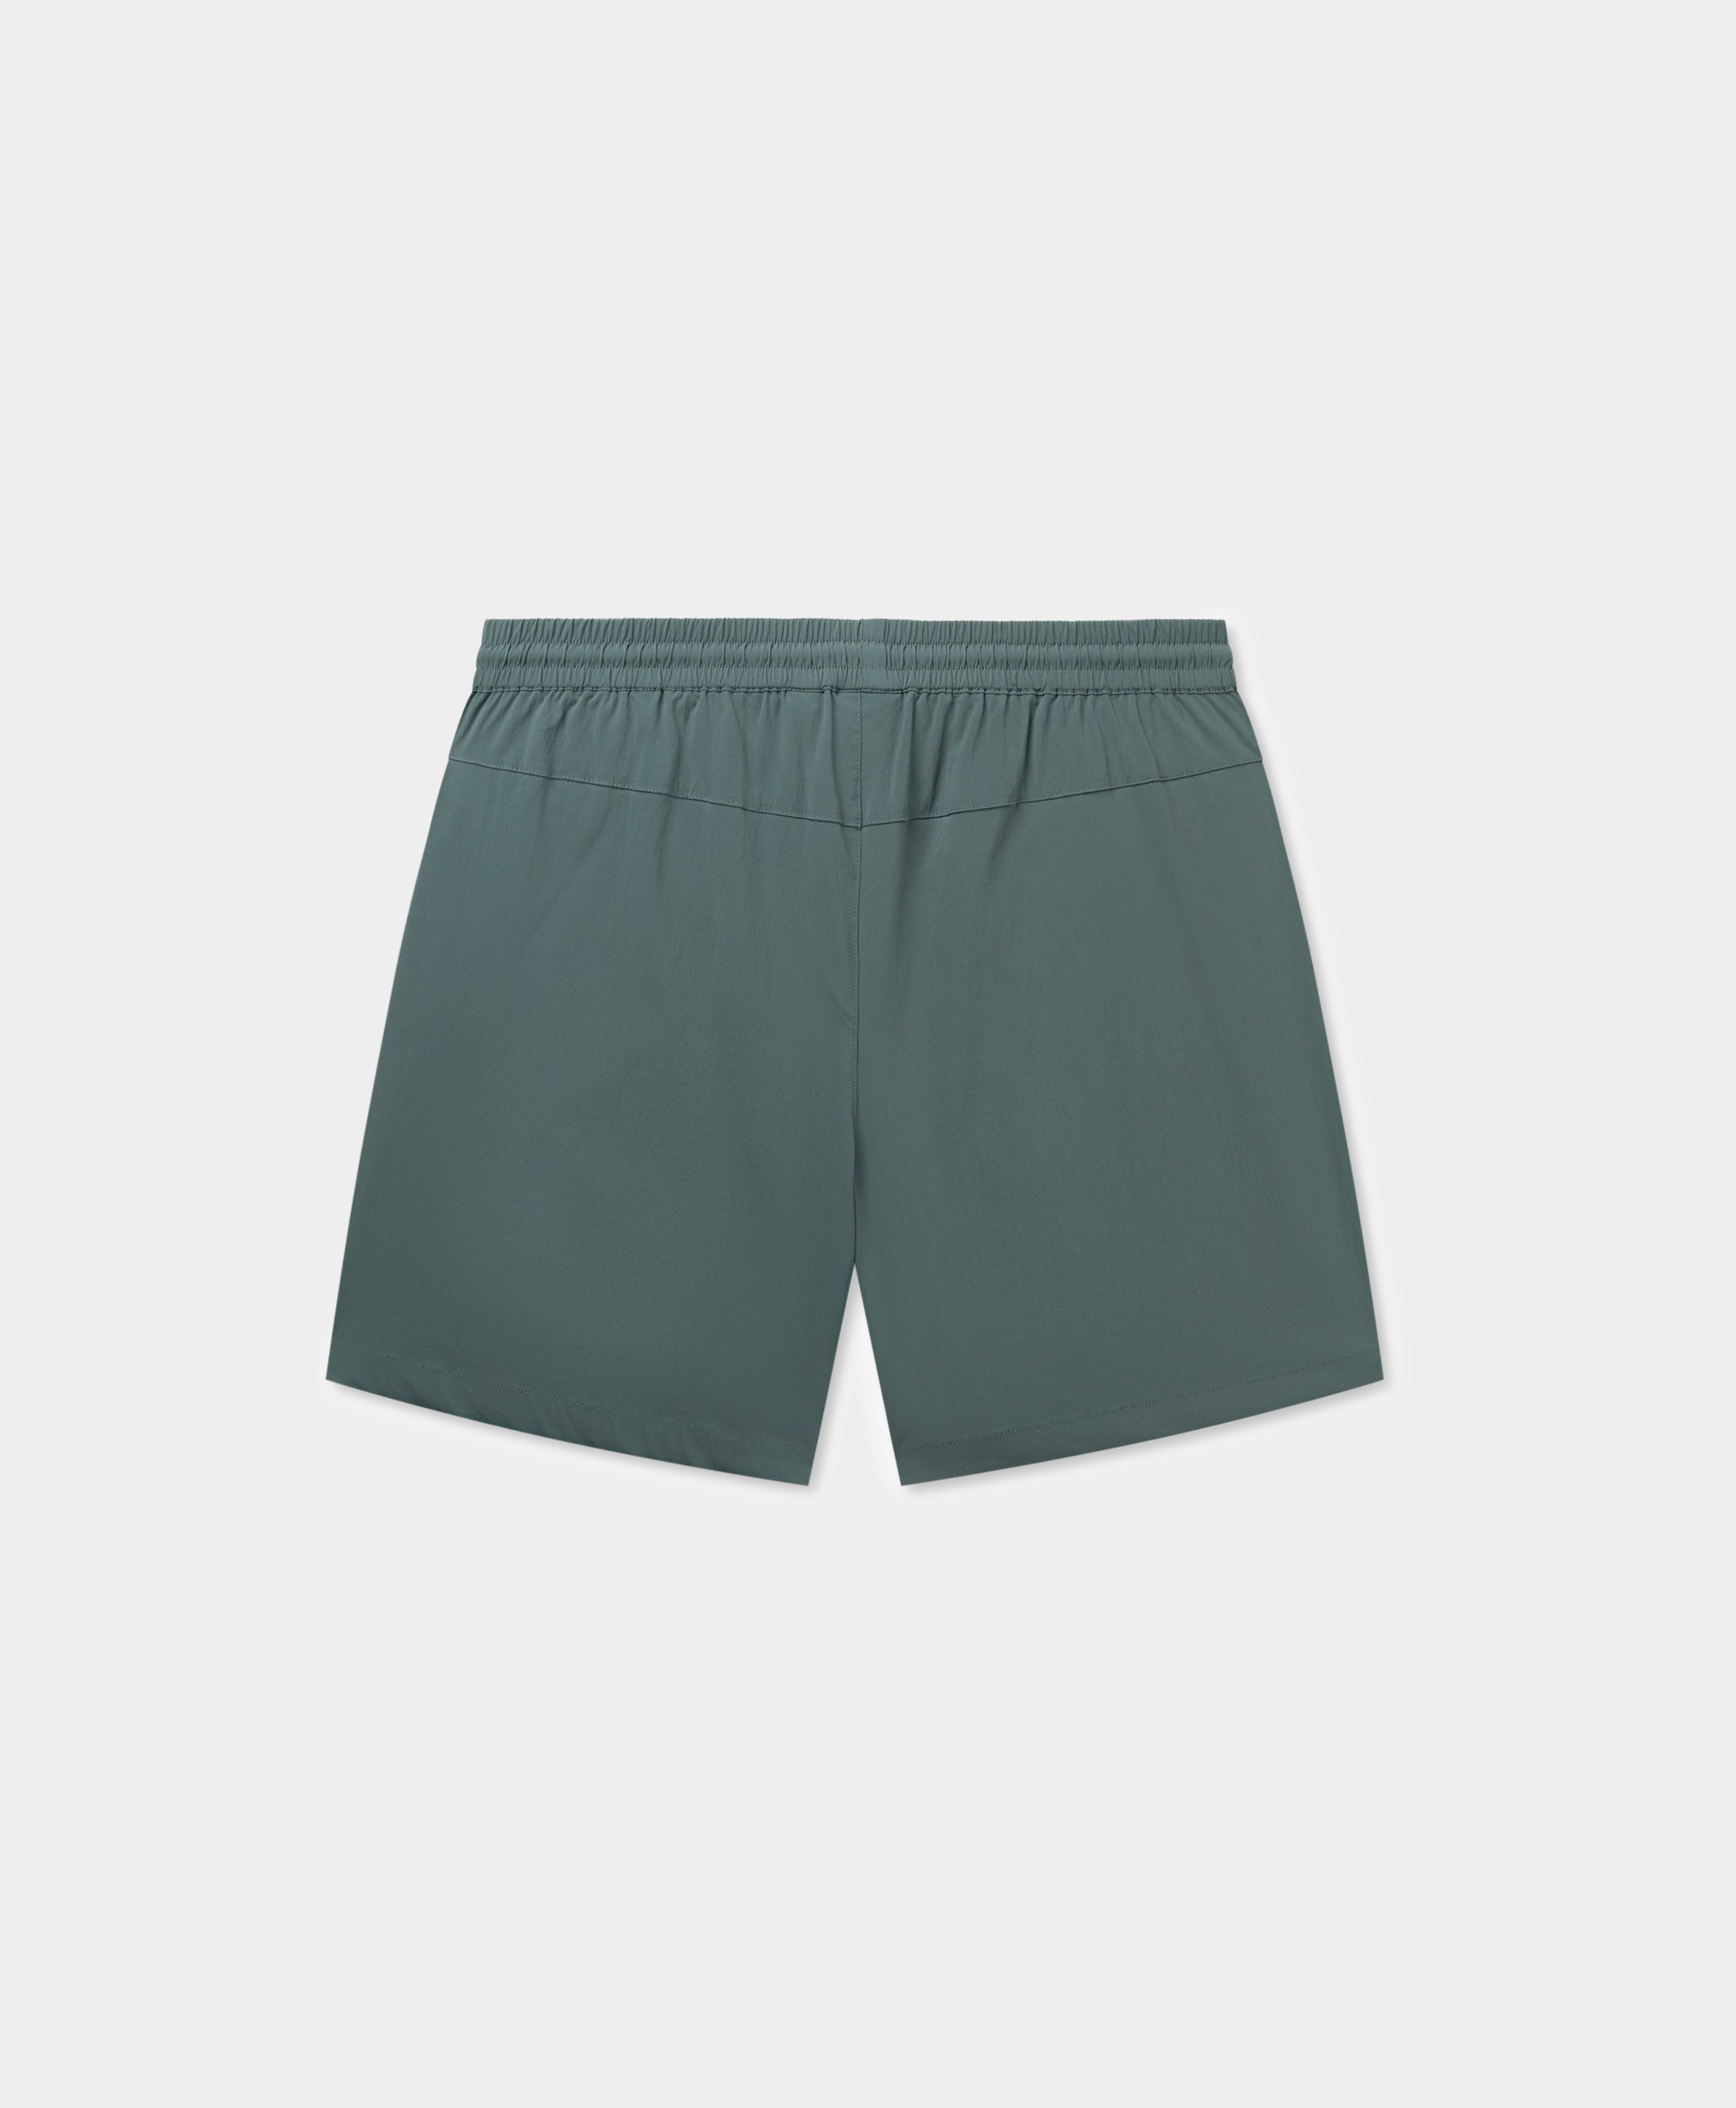 DP - Silver Green Mehani Shorts - Packshot - Rear